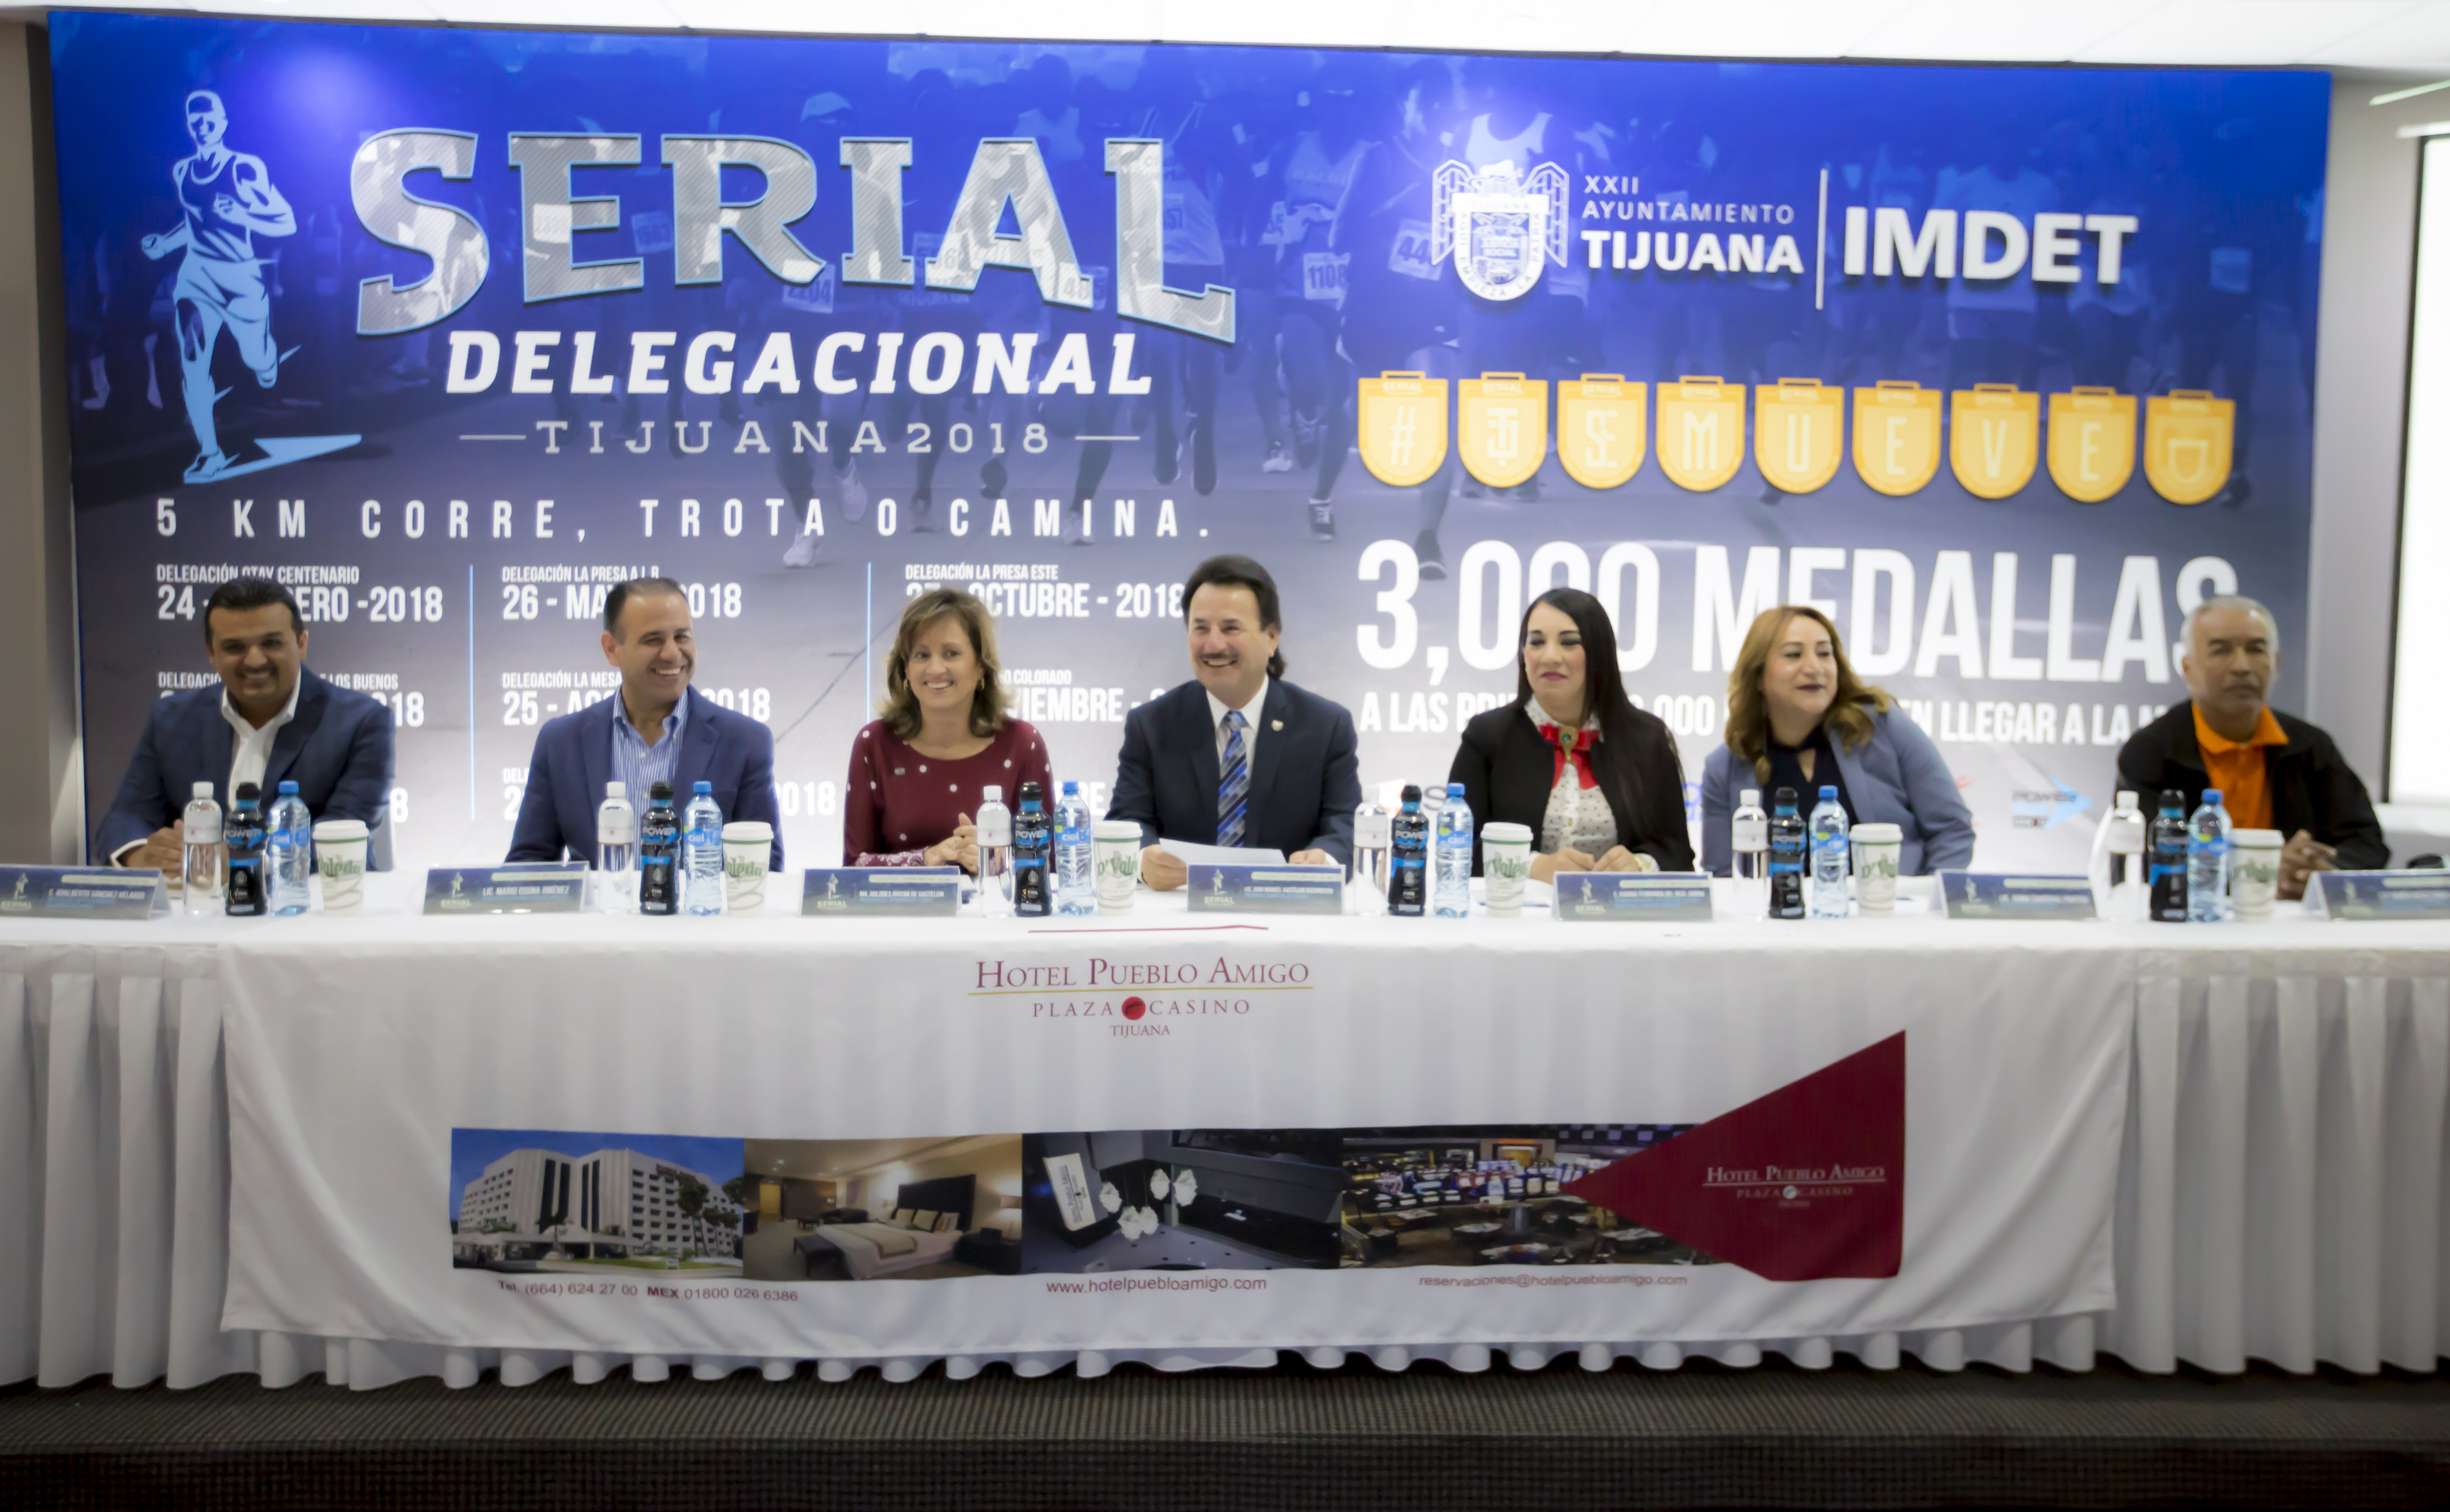 Presentan Serial Atlético Delegacional 2018 “Tijuana se Mueve”